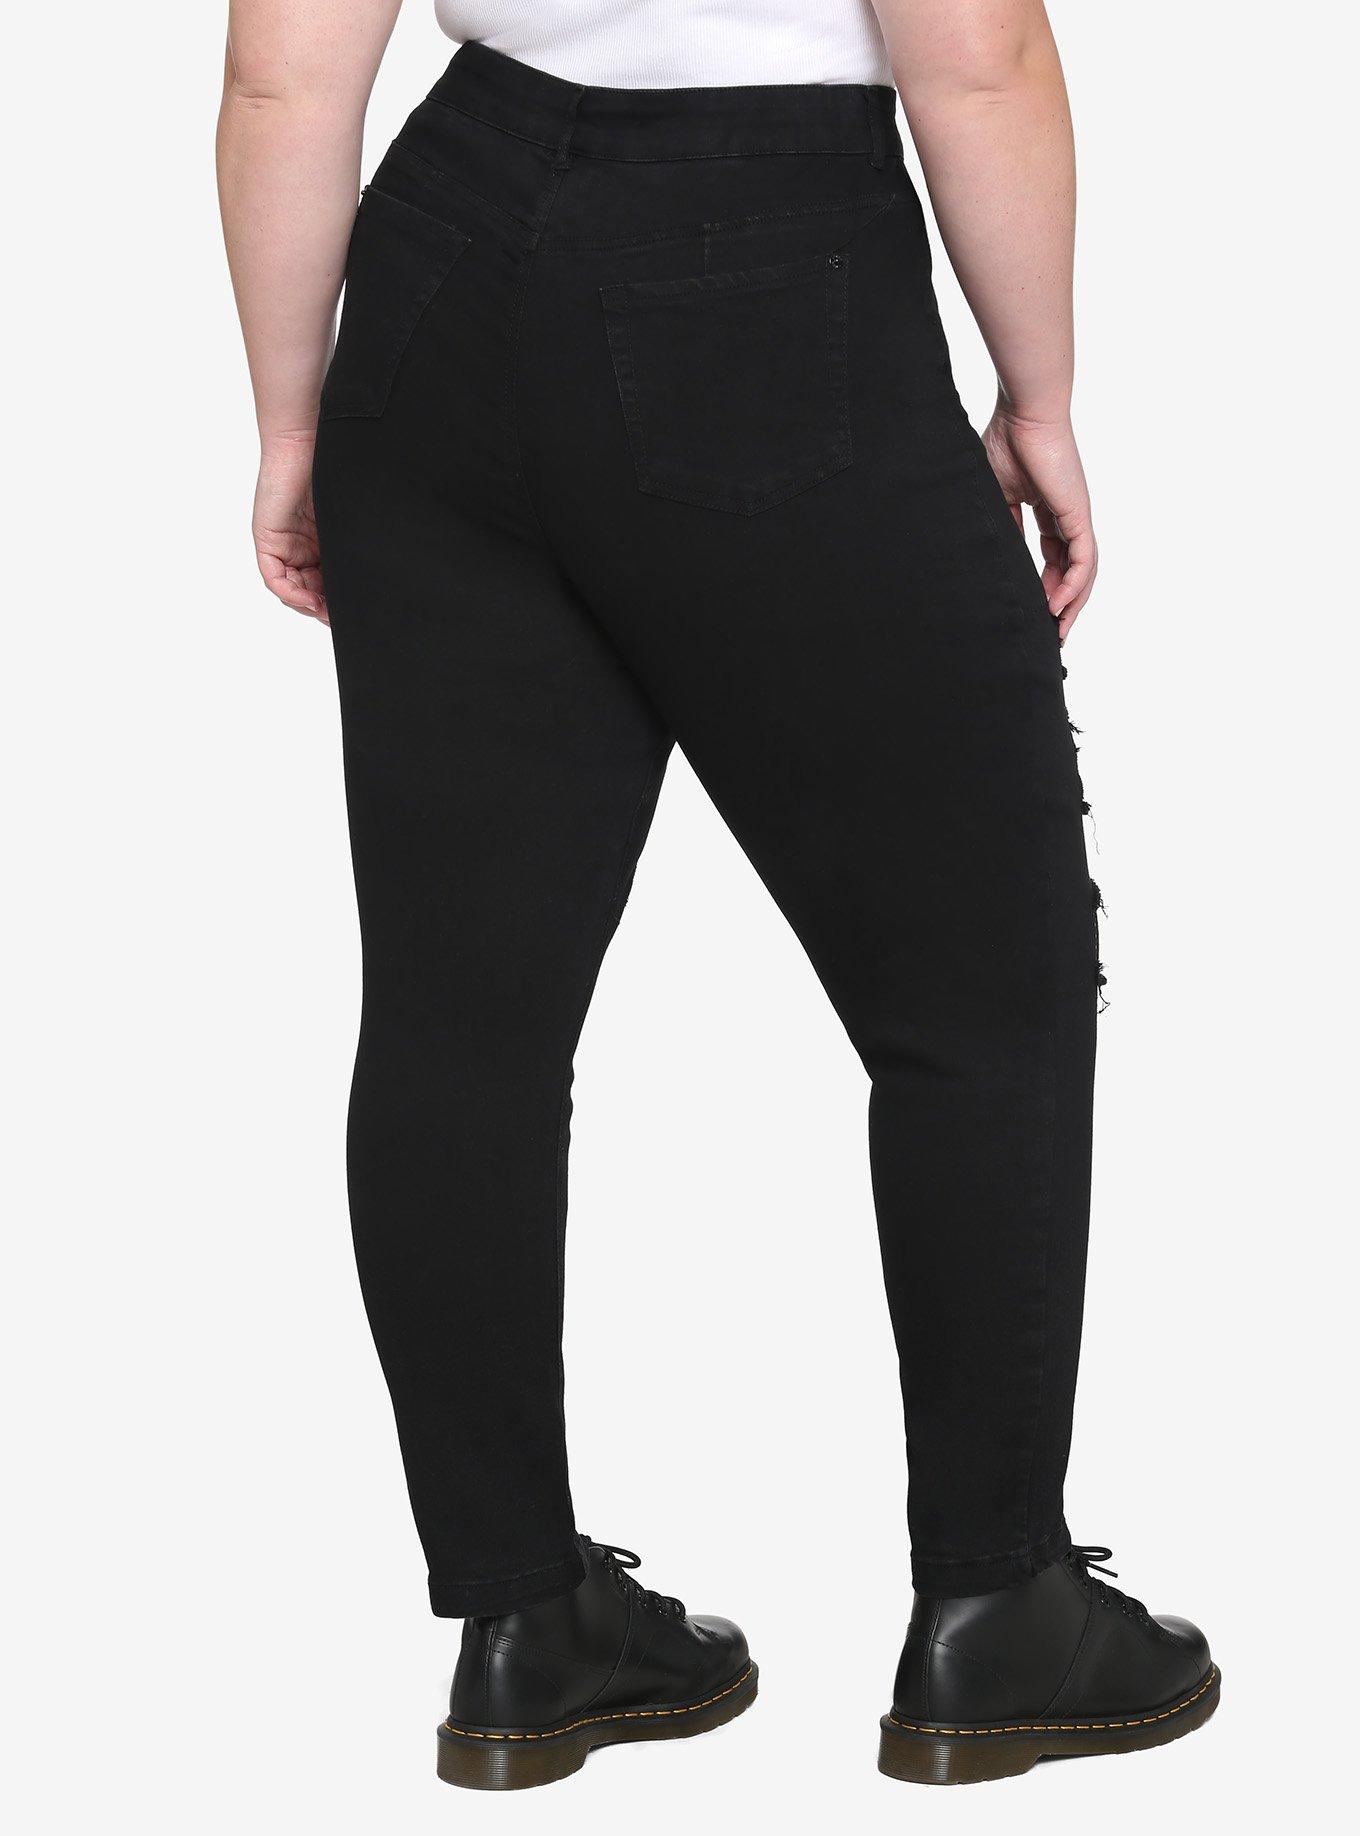 Black Fishnet Destructed Chain Skinny Jeans Plus Size, BLACK, alternate